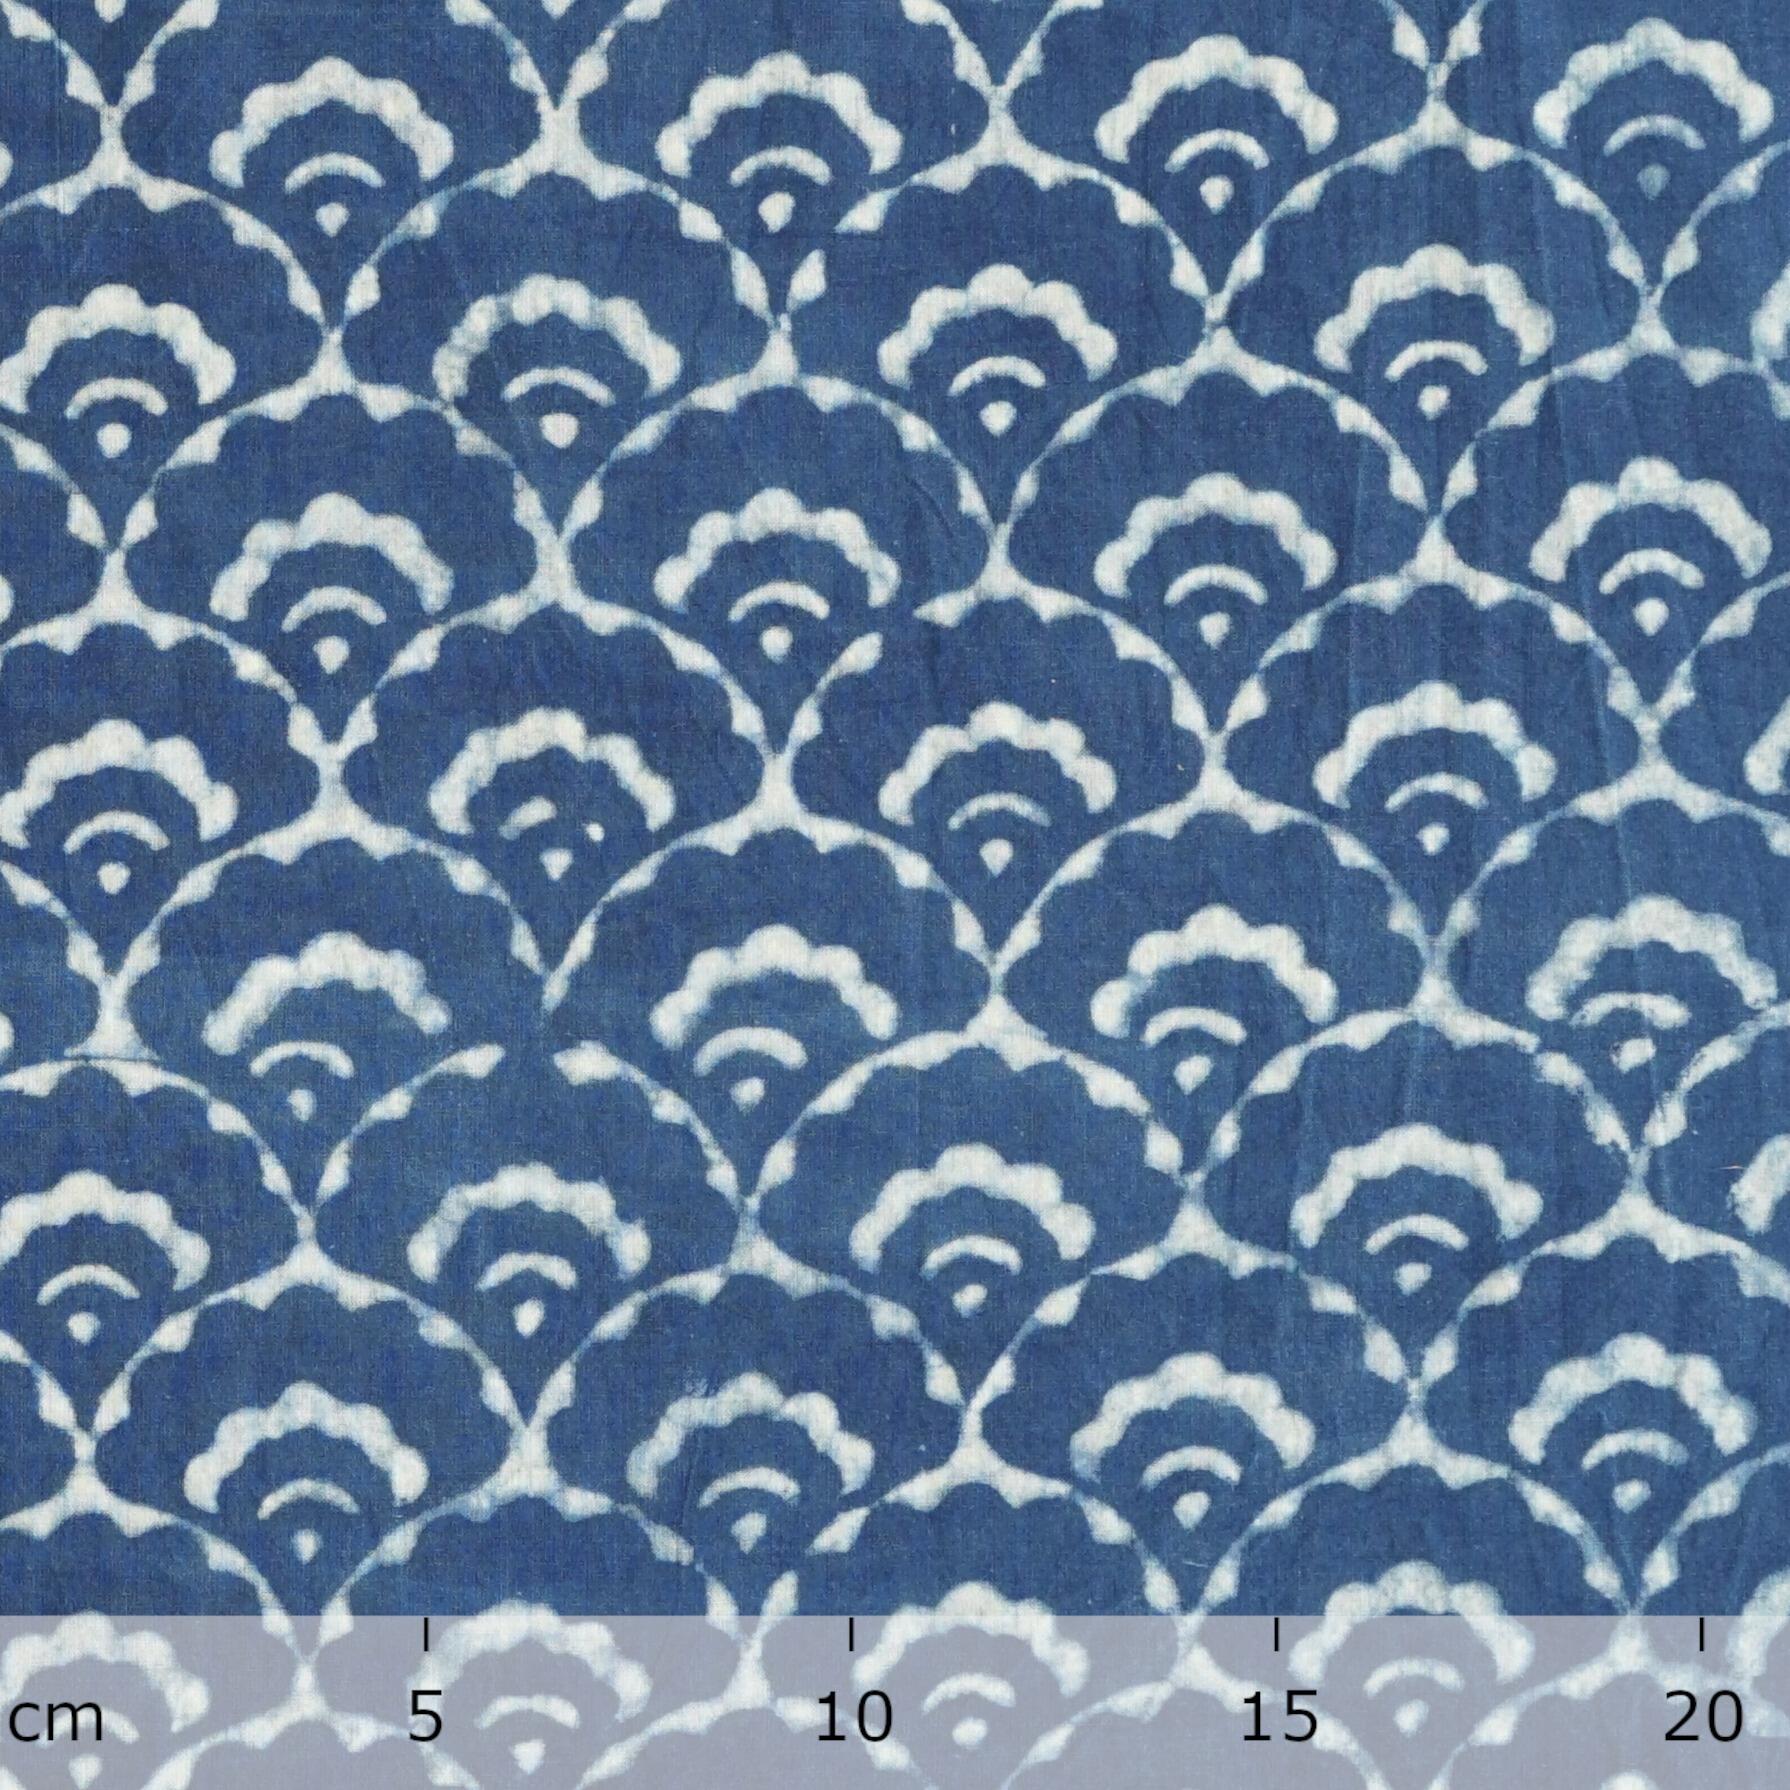 4 - AHM19 - Block-Printed Cloth - 100% Cotton Fabric - Indigo Dye - Abode of Clouds - Ruler